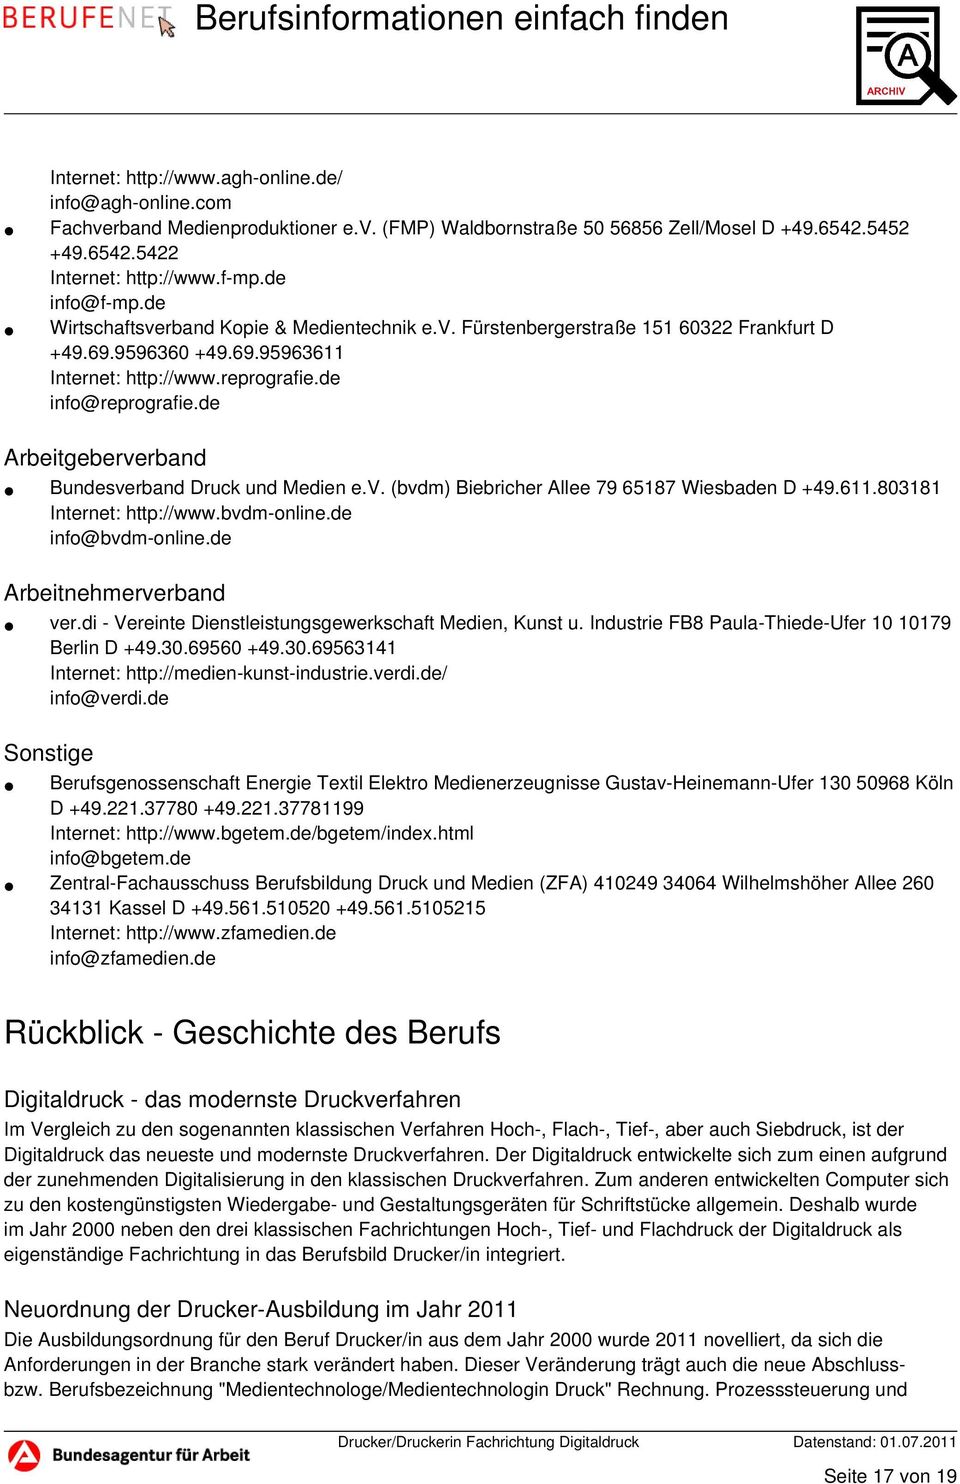 de Arbeitgeberverband Bundesverband Druck und Medien e.v. (bvdm) Biebricher Allee 79 65187 Wiesbaden D +49.611.803181 Internet: http://www.bvdm-online.de info@bvdm-online.de Arbeitnehmerverband ver.